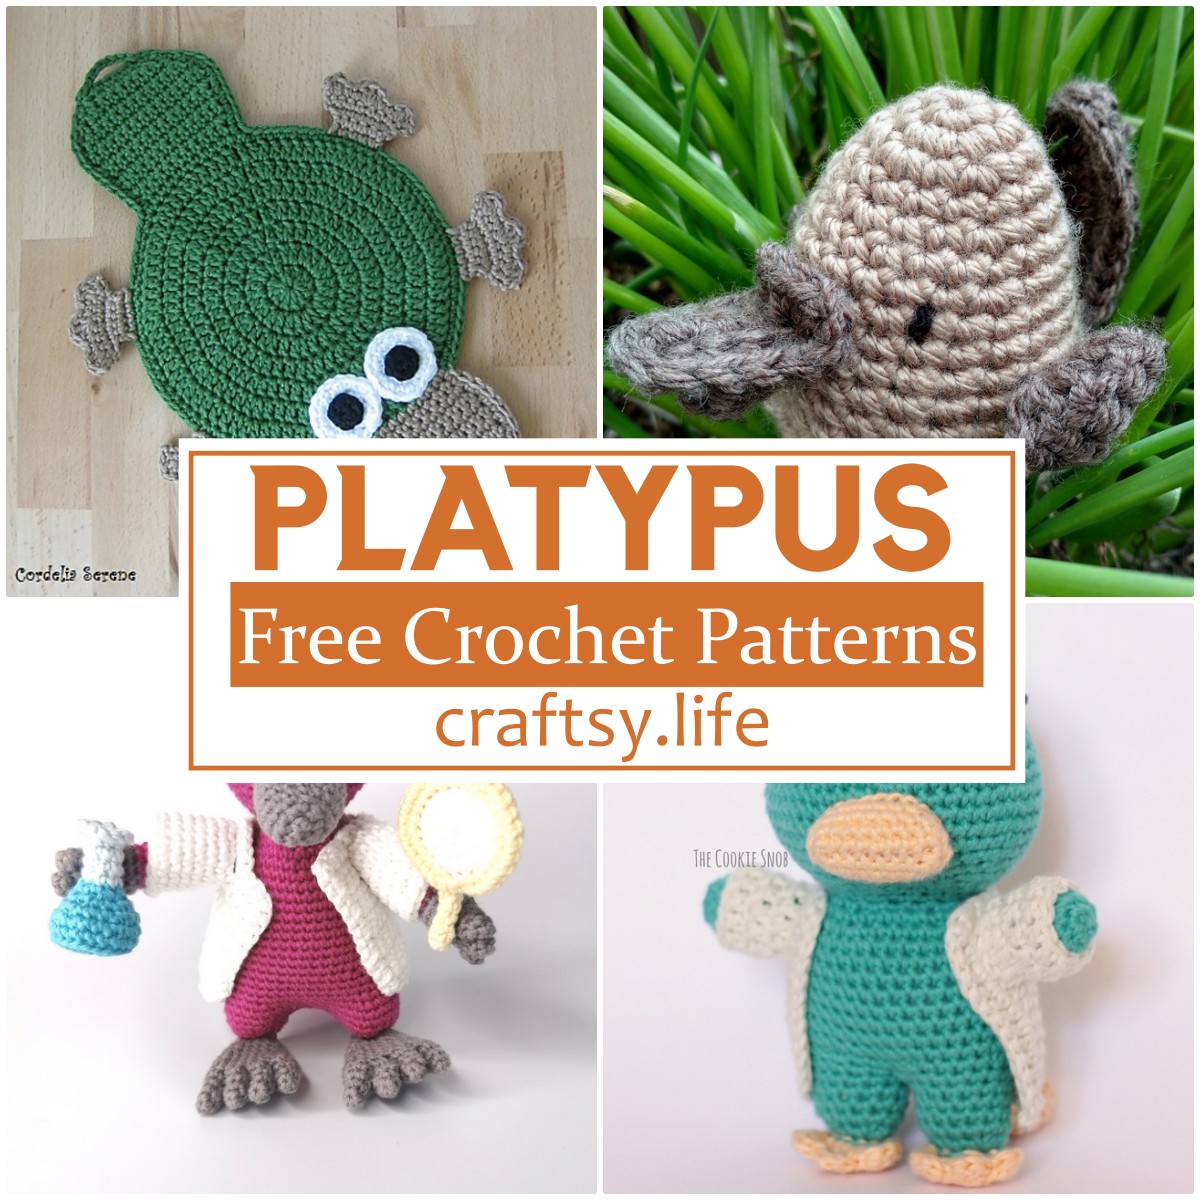 Free Crochet Platypus Patterns